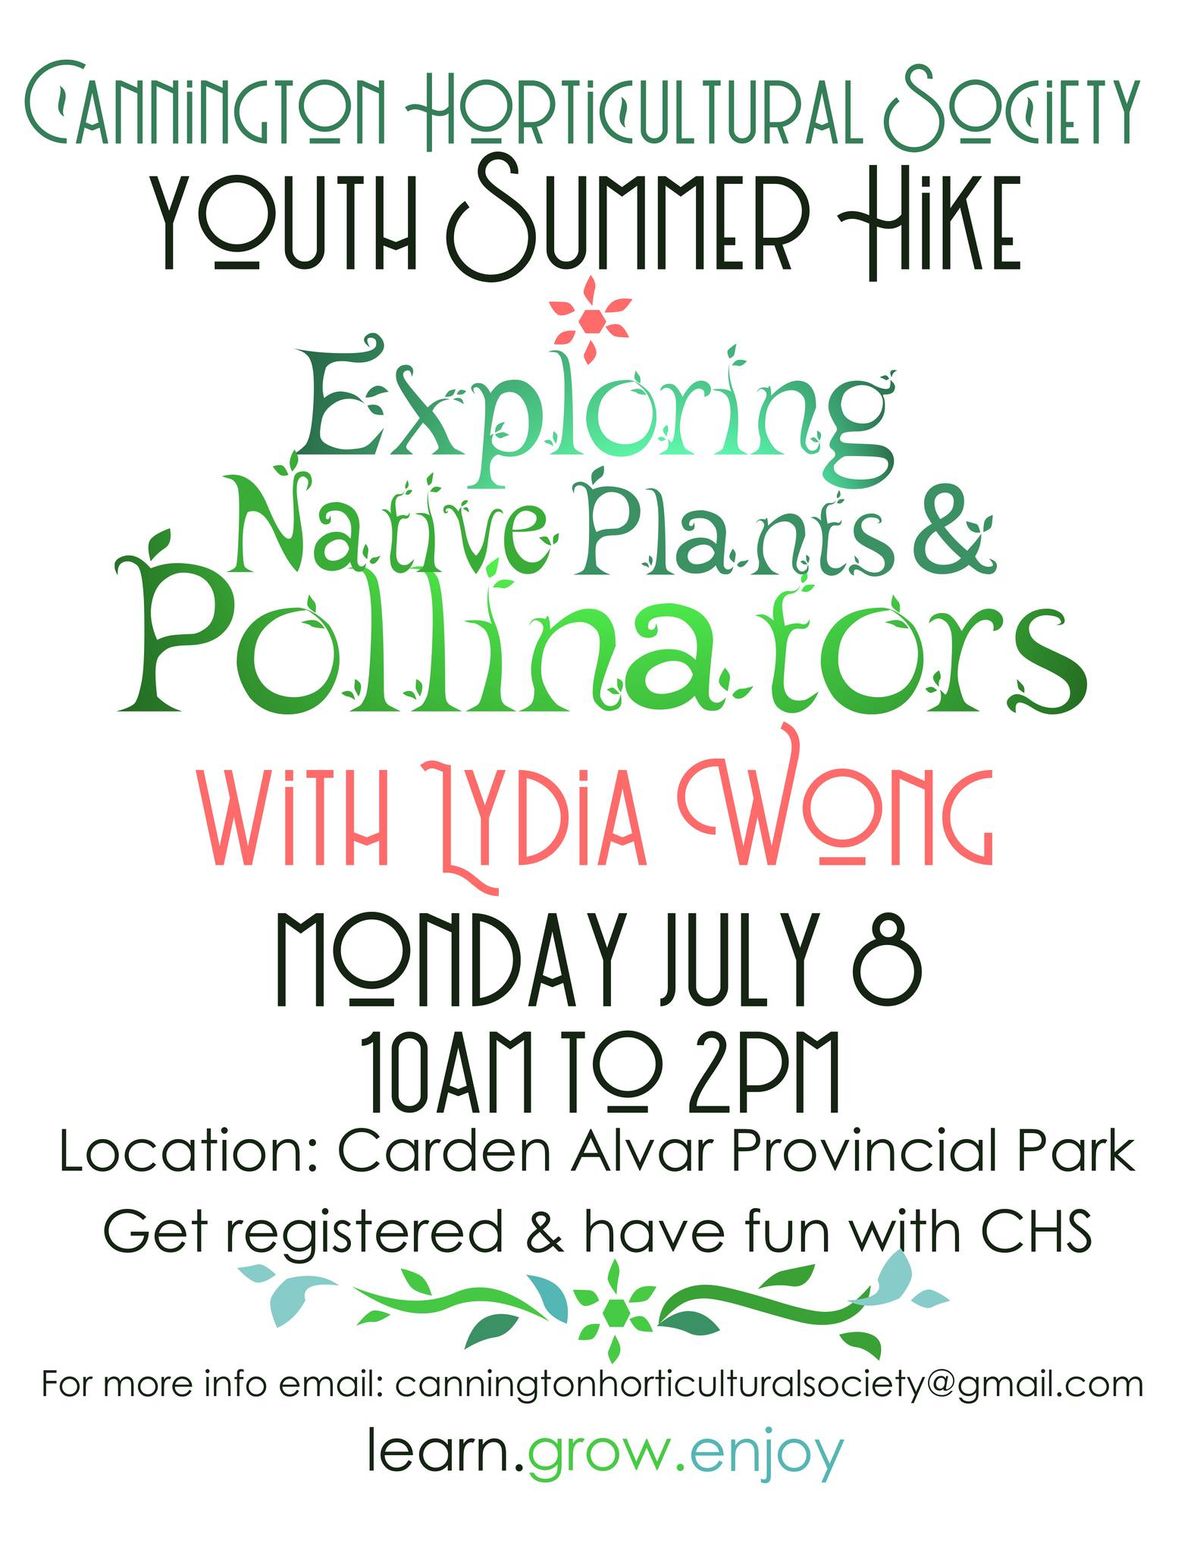 CHS Youth Hike: Exploring Native Plants & Pollinators